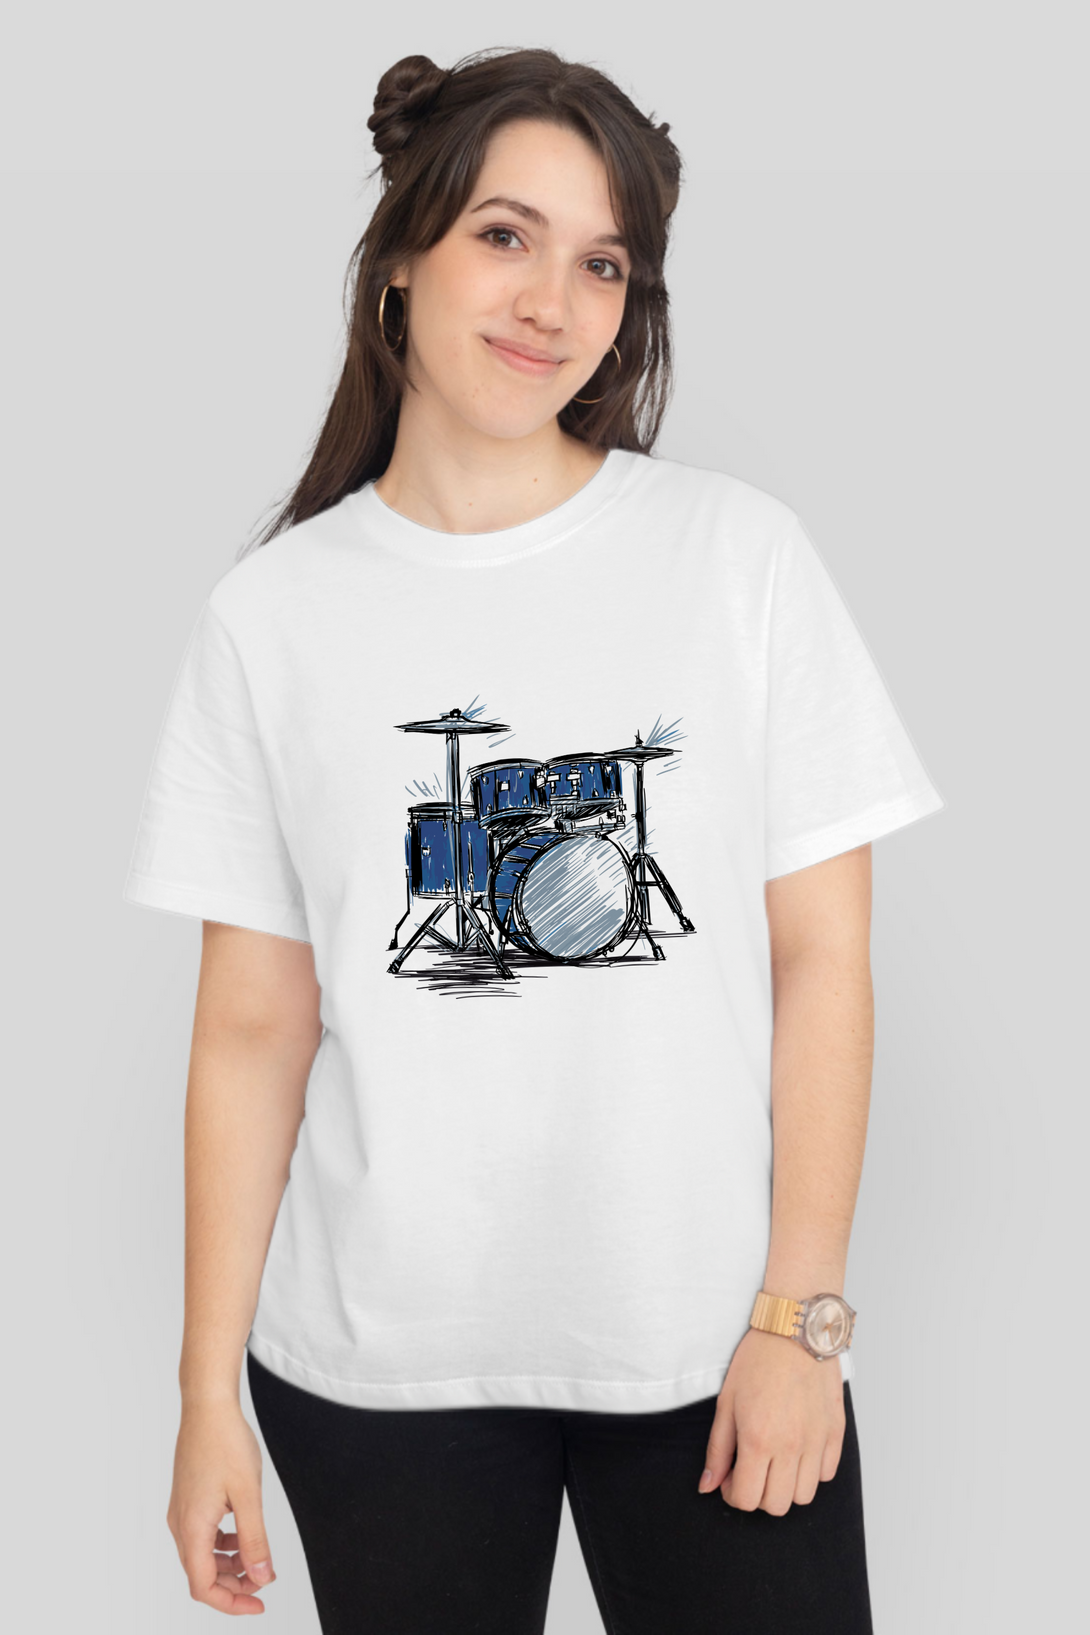 Rhythmic Beats Printed T-Shirt For Women - WowWaves - 7